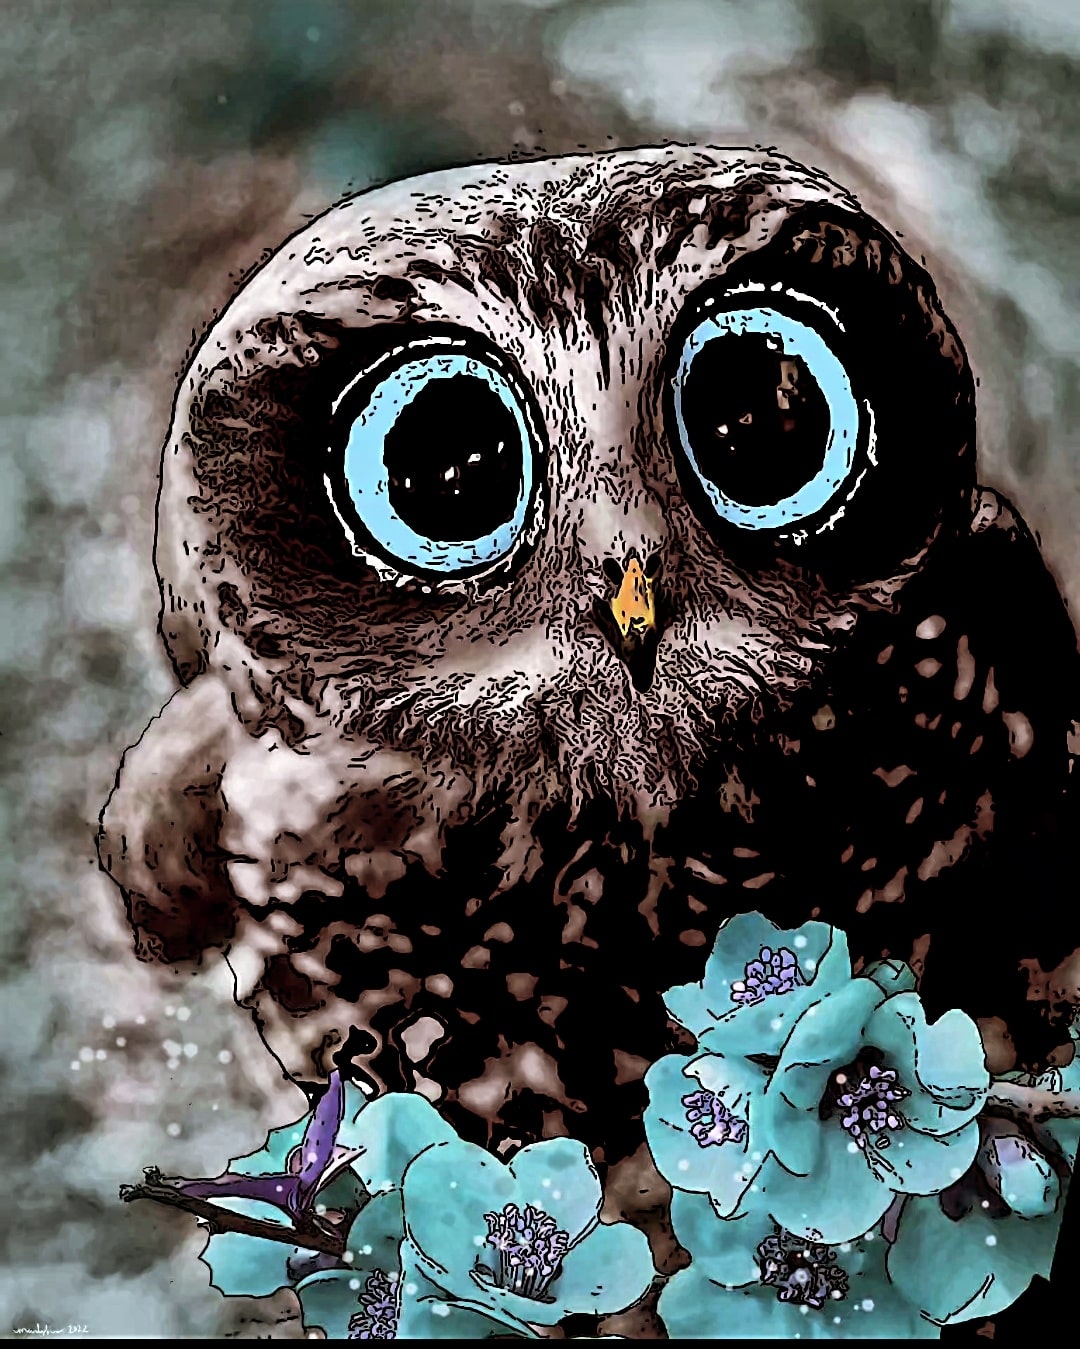 Baby Spotted Owl by SnodgrassStudios on DeviantArt